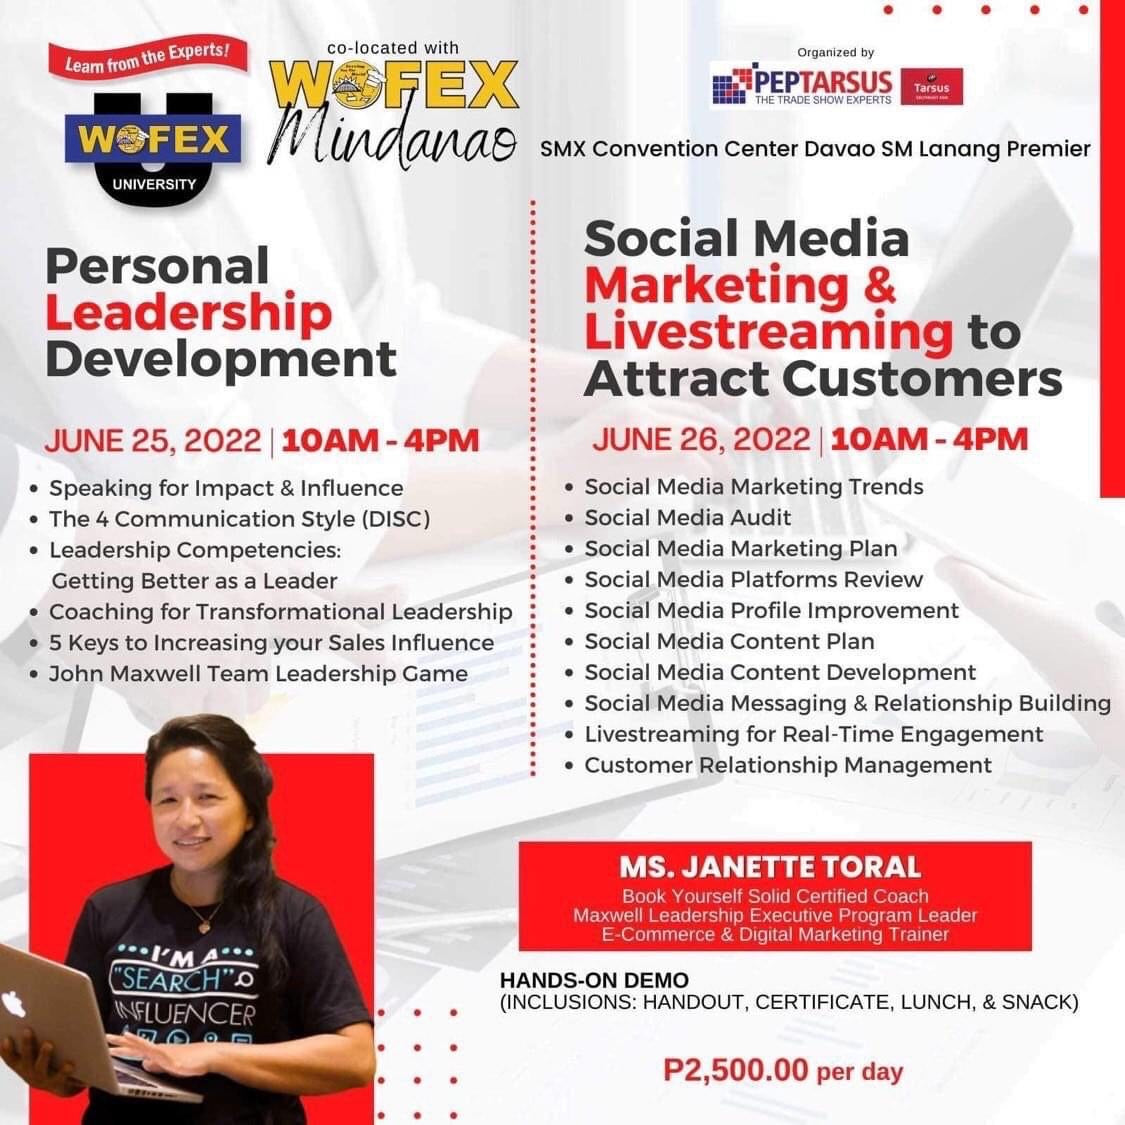 Personal Leadership Development and Social Media Marketing